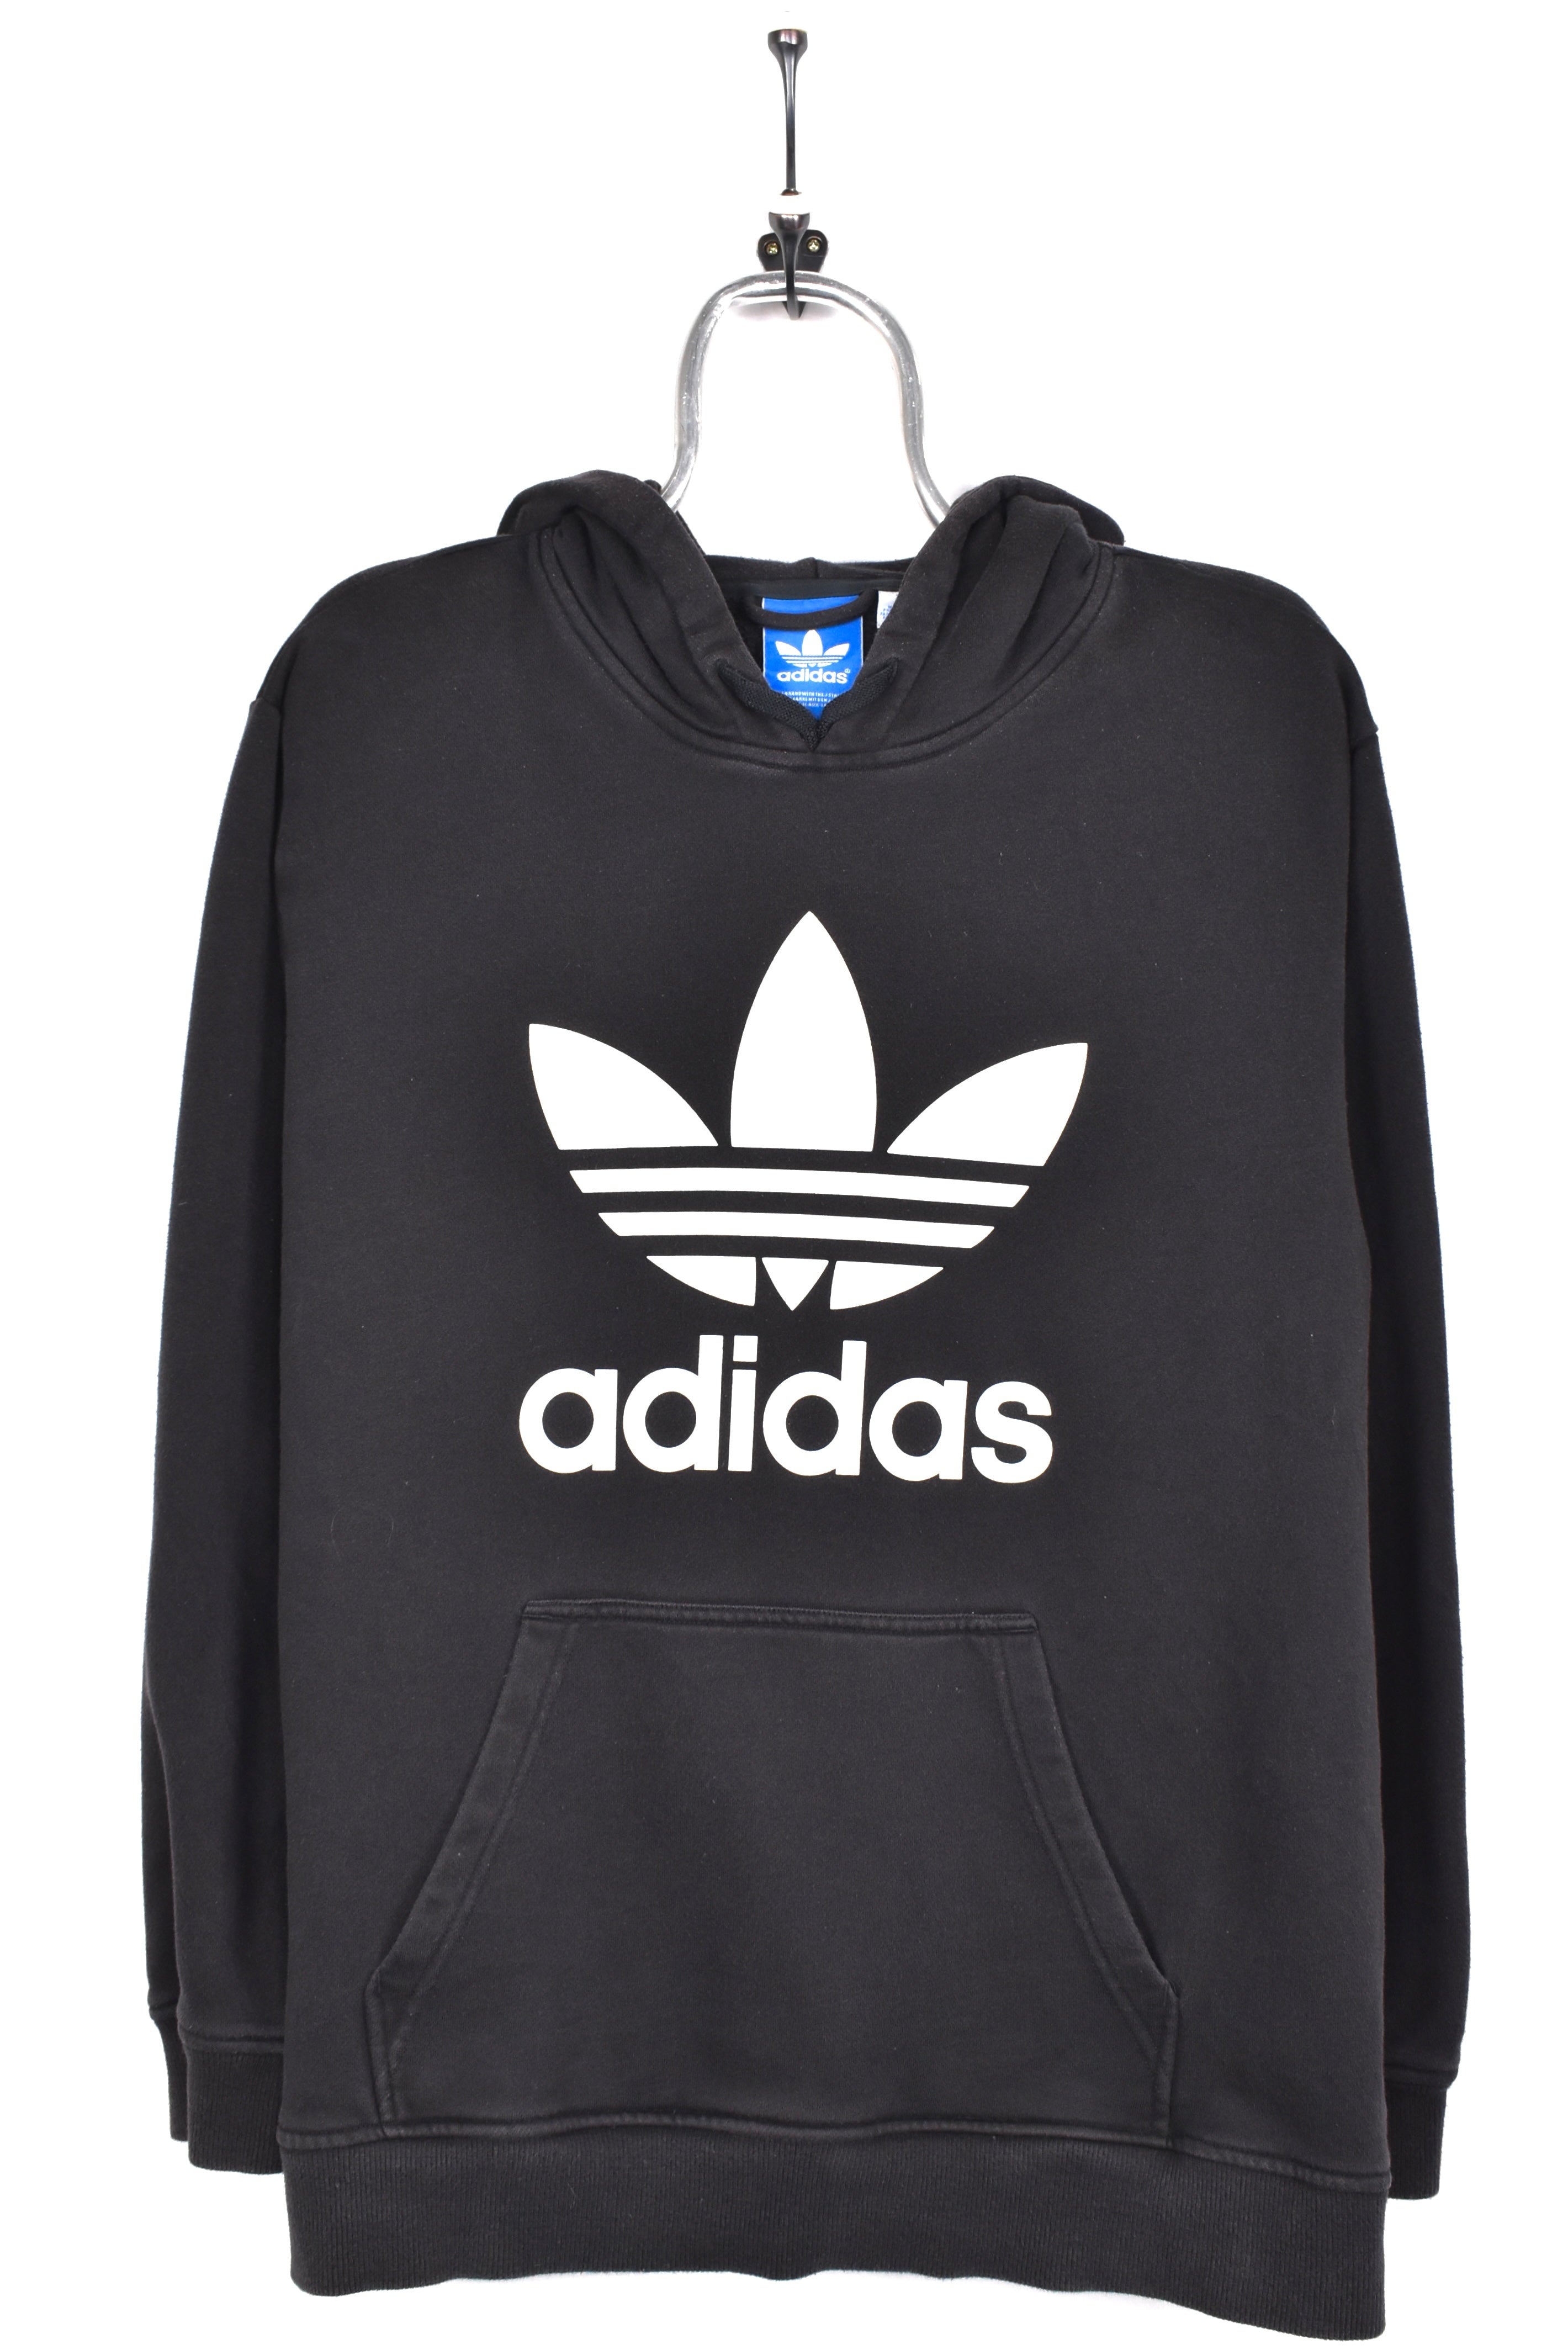 Modern Adidas hoodie, black graphic sweatshirt - AU Medium ADIDAS